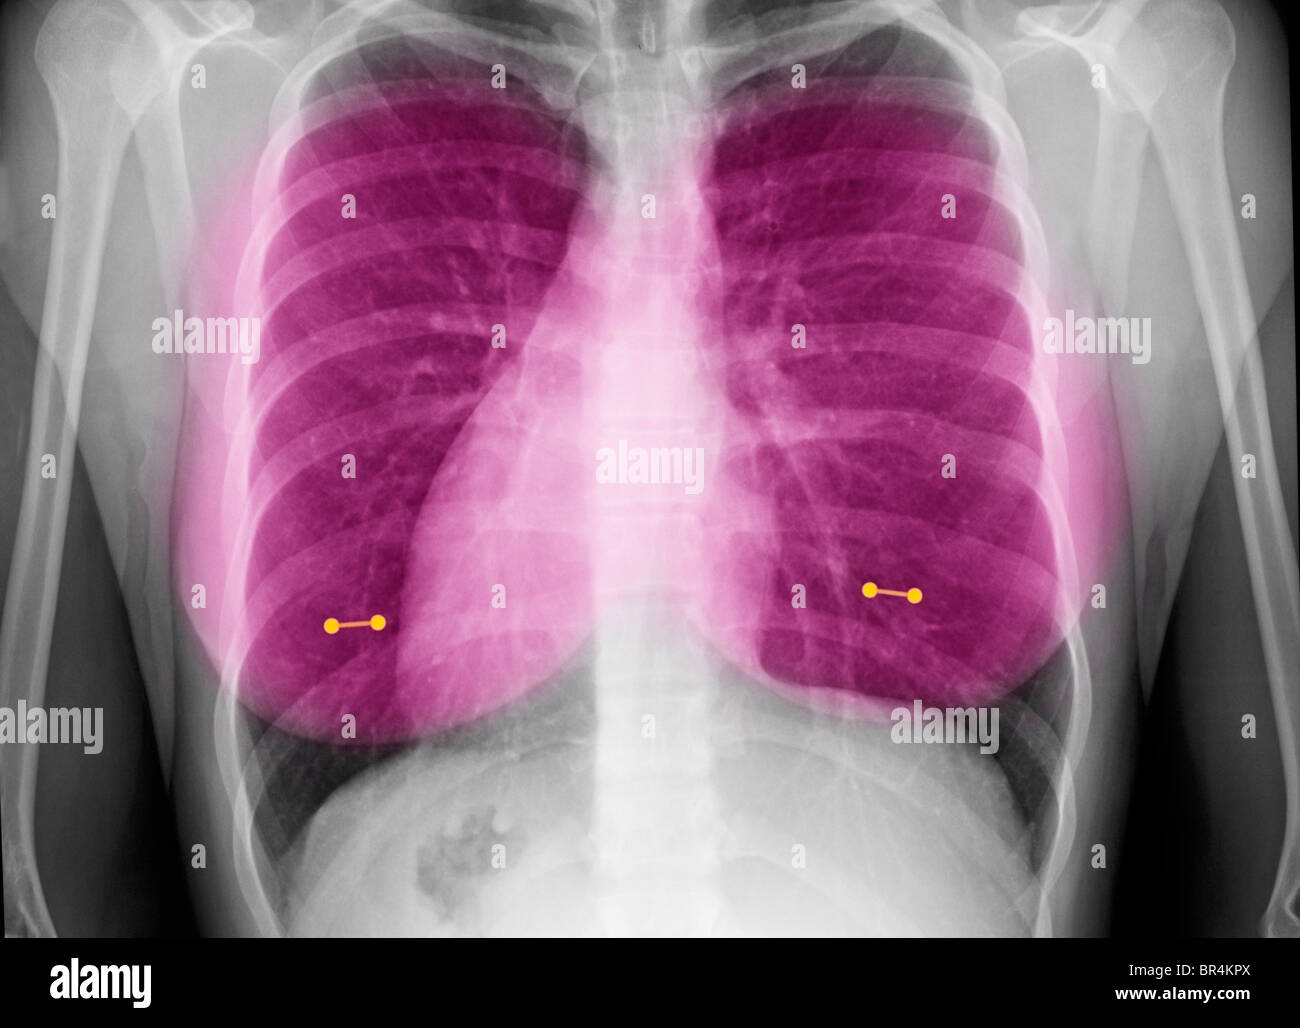 x-ray zeigt Brustwarzenpiercings bei einer jungen Frau, Brust Röntgen zeigt Brustwarzenpiercings Stockfoto